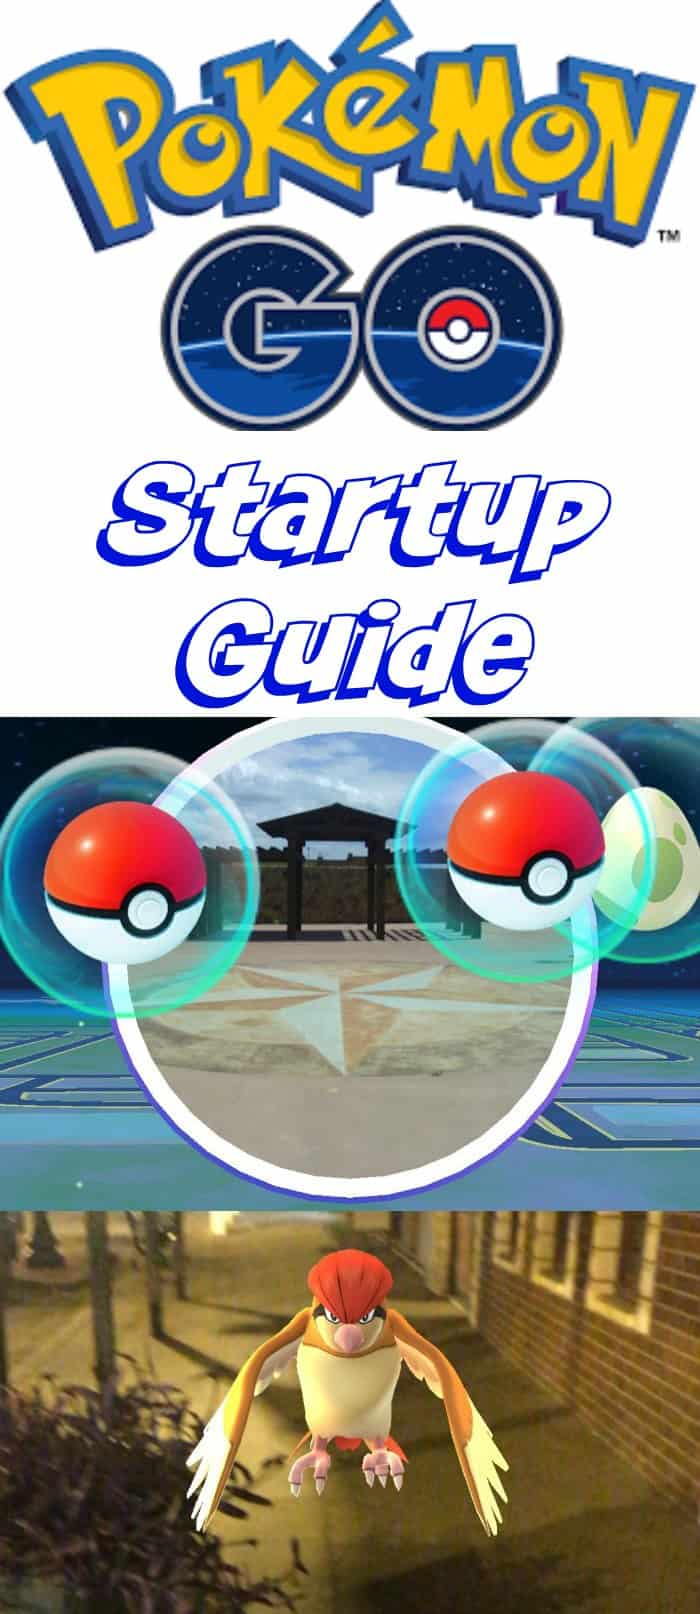 Pokemon GO Startup Guide